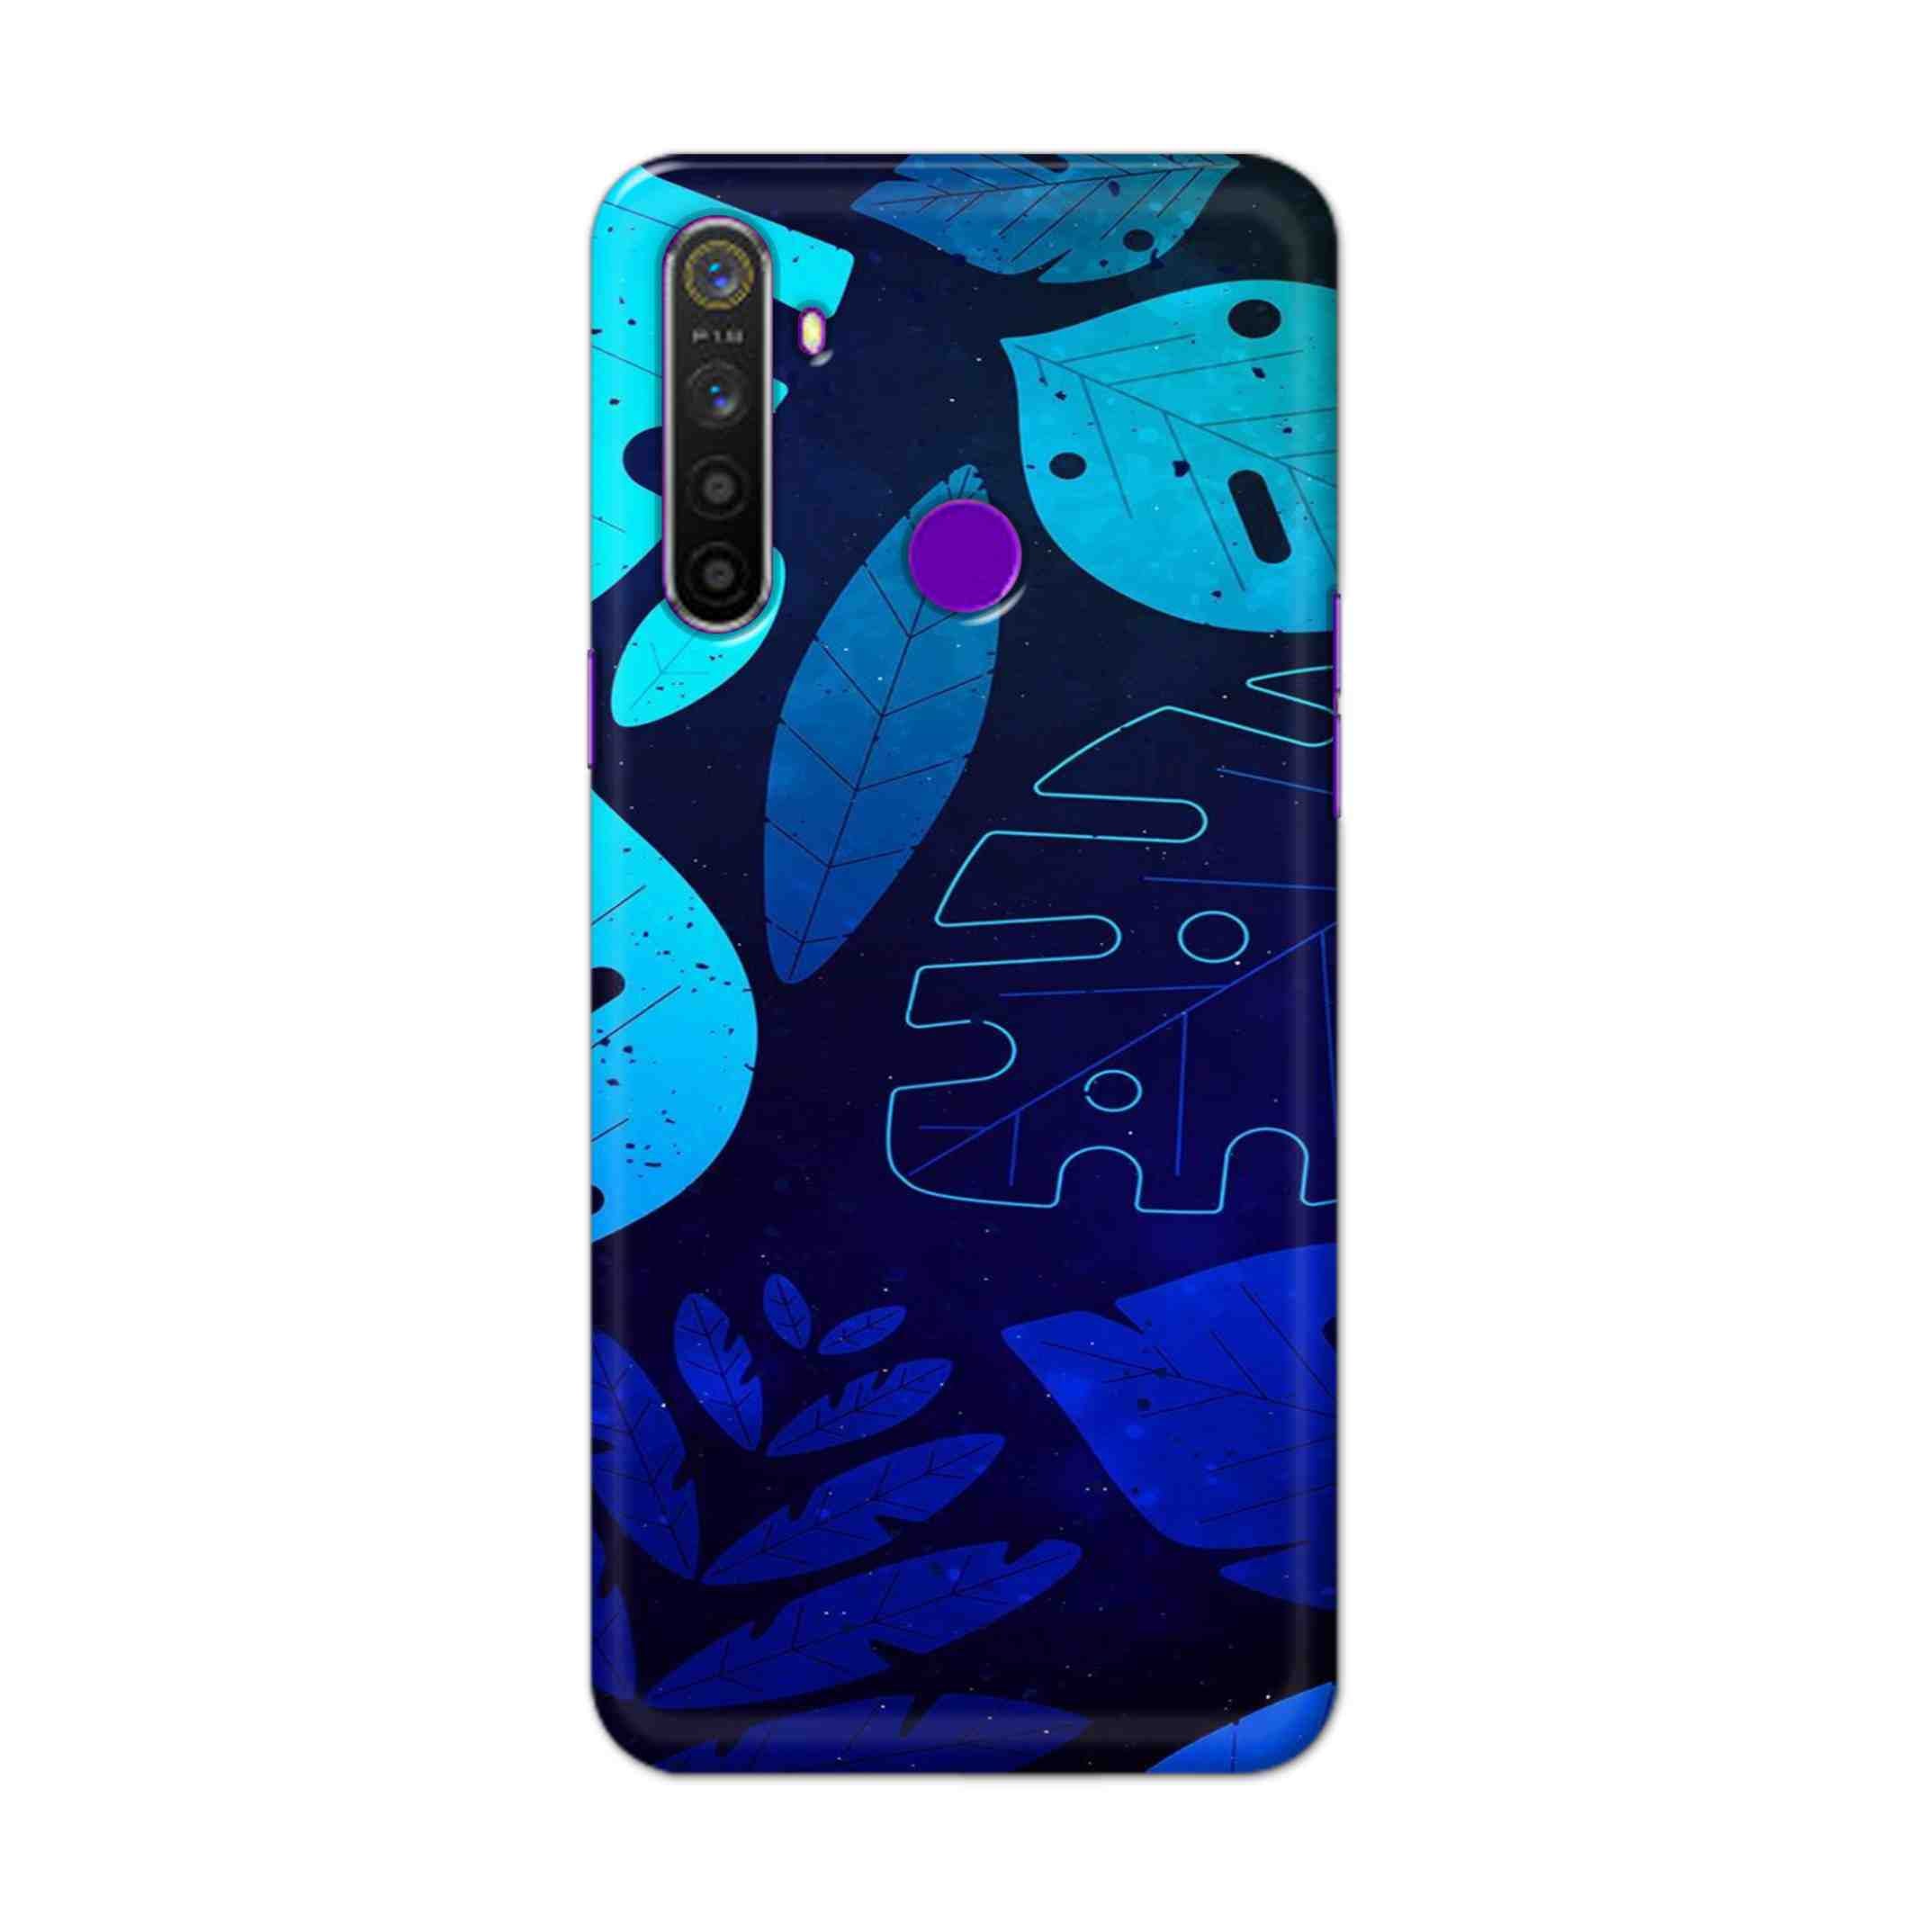 Buy Neon Leaf Hard Back Mobile Phone Case Cover For Realme 5 Pro Online